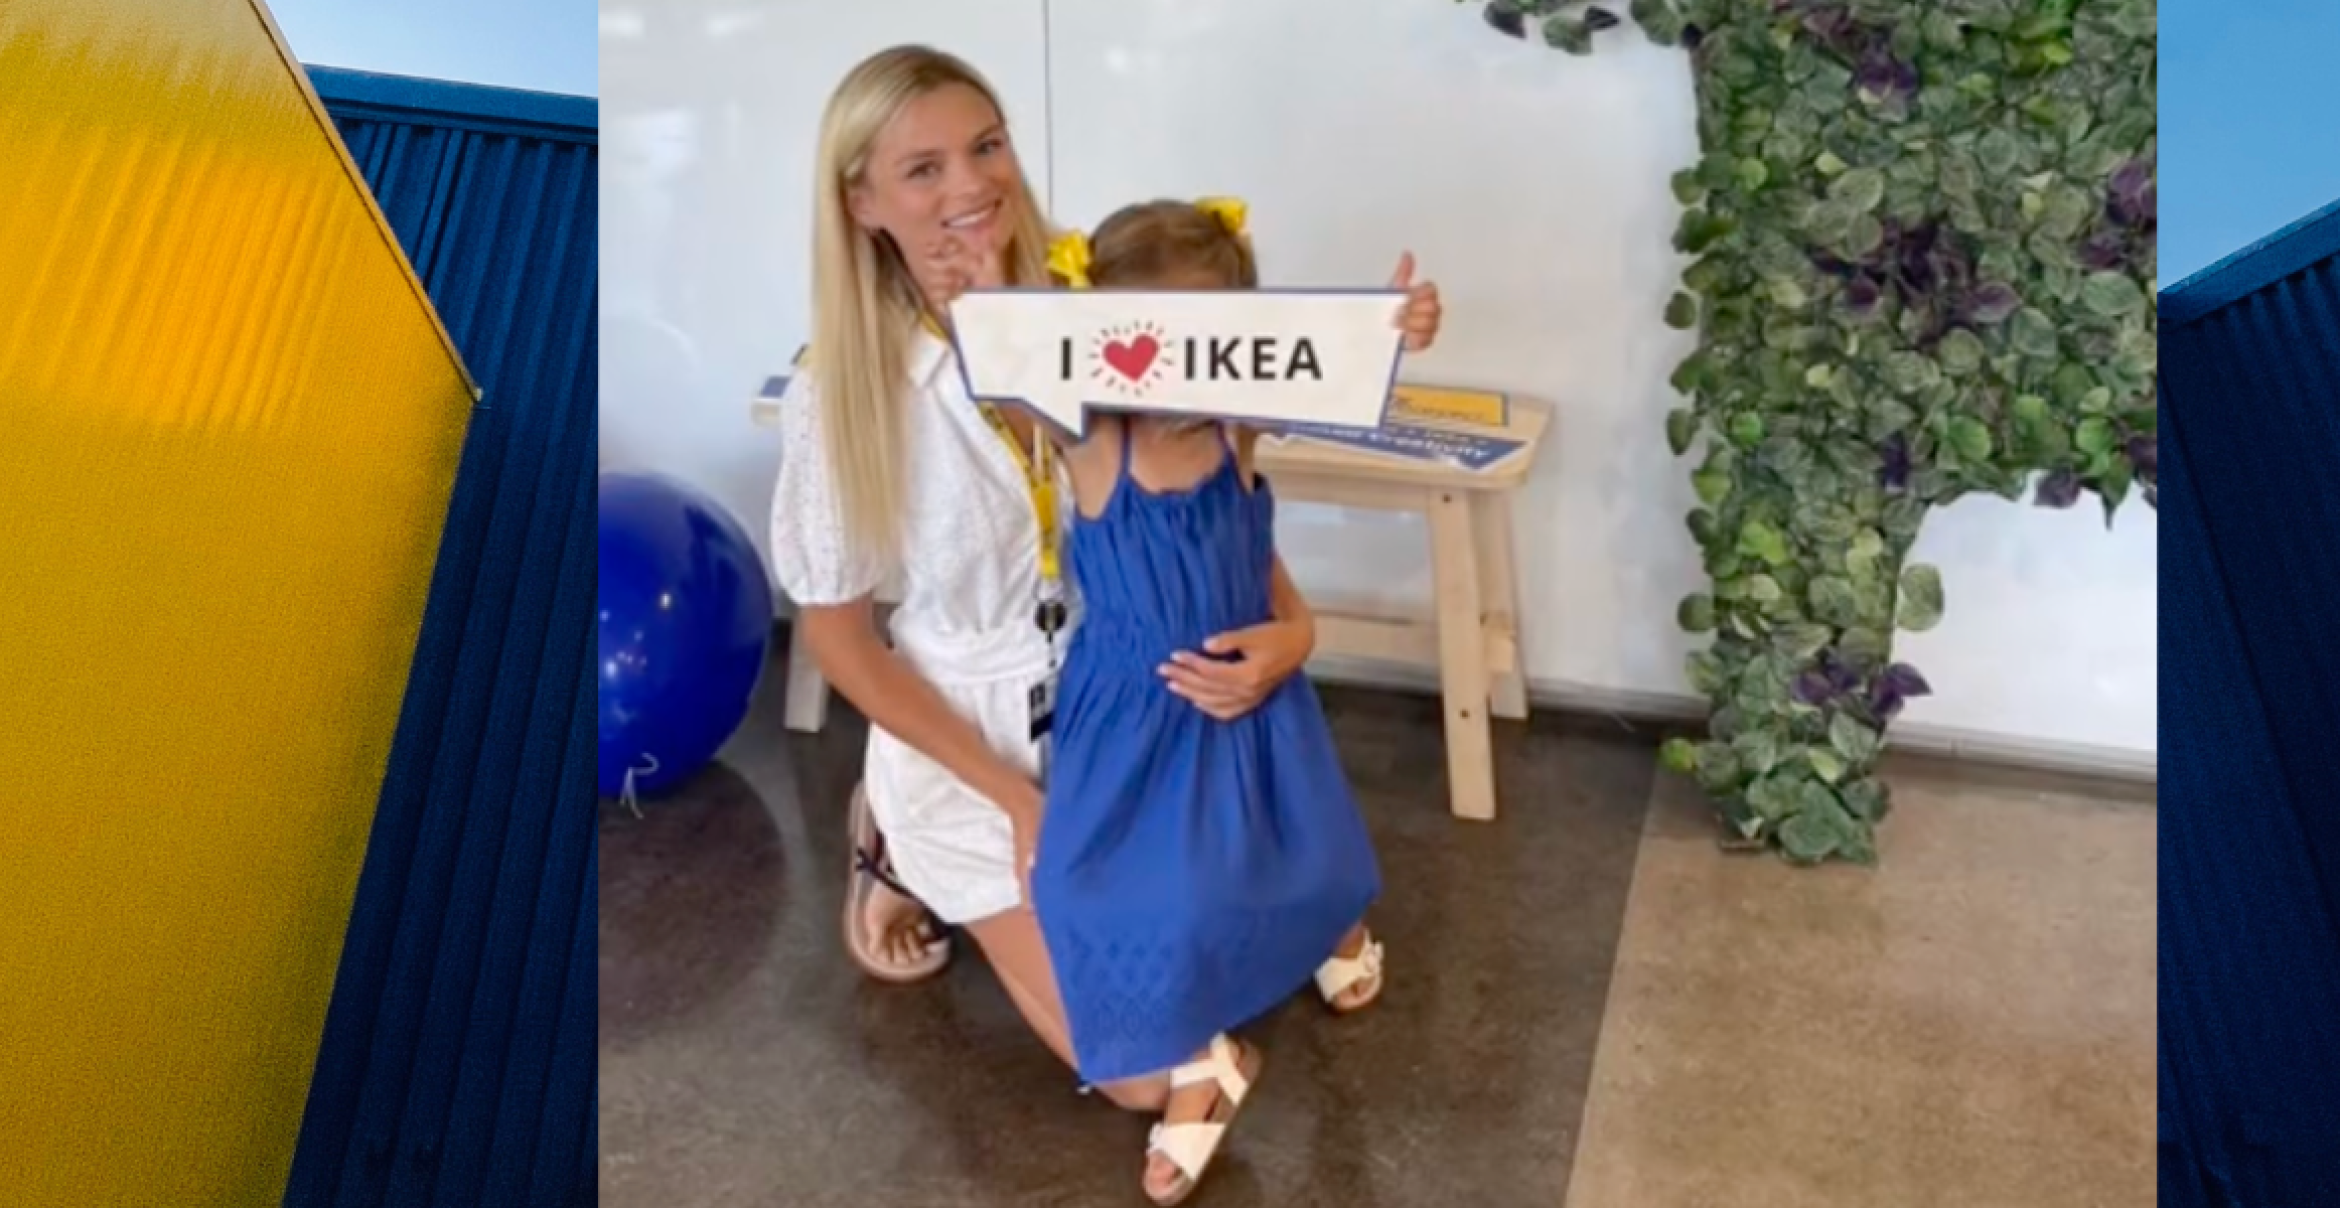 McDonald’s war gestern: 3-Jährige feiert ihren Kindergeburtstag bei Ikea